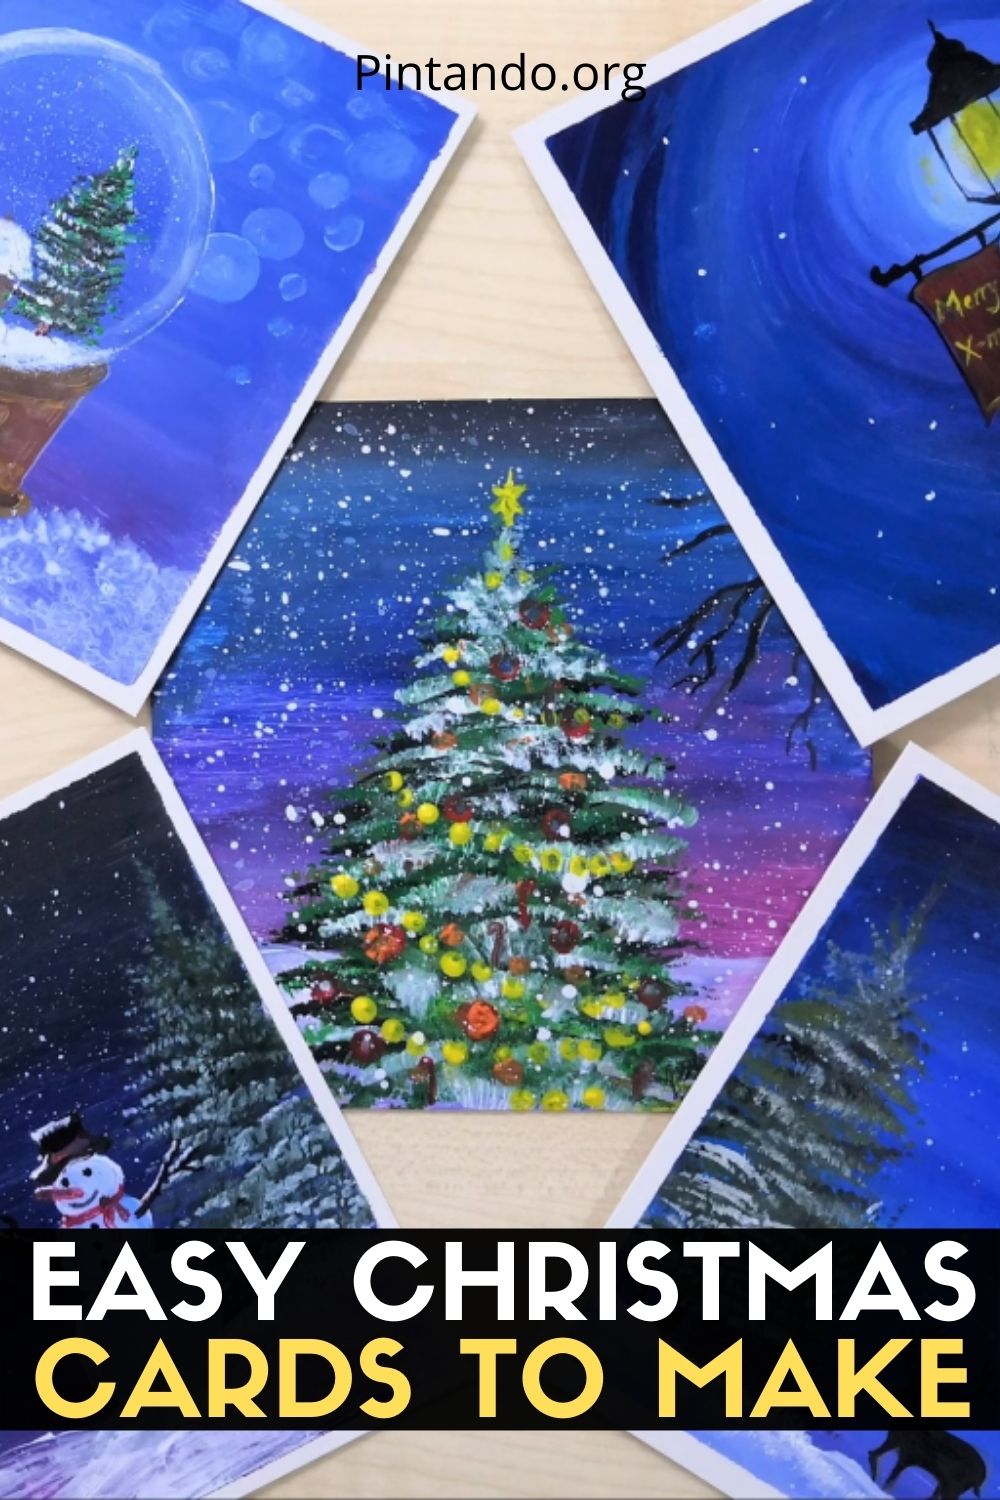 EASY CHRISTMAS CARDS TO MAKE